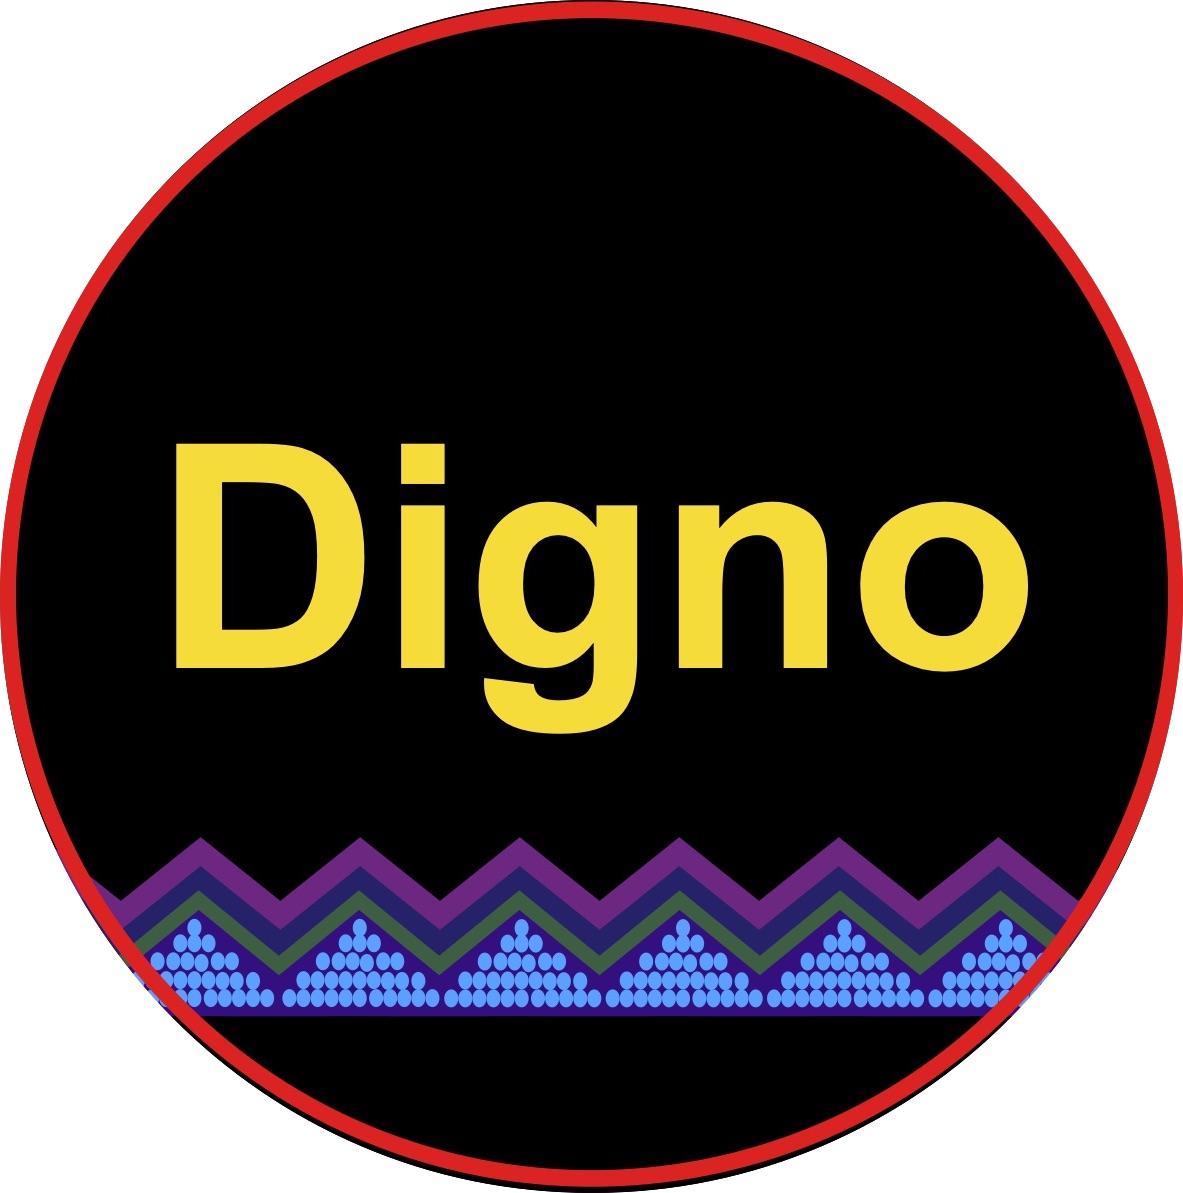 DIGNO logo